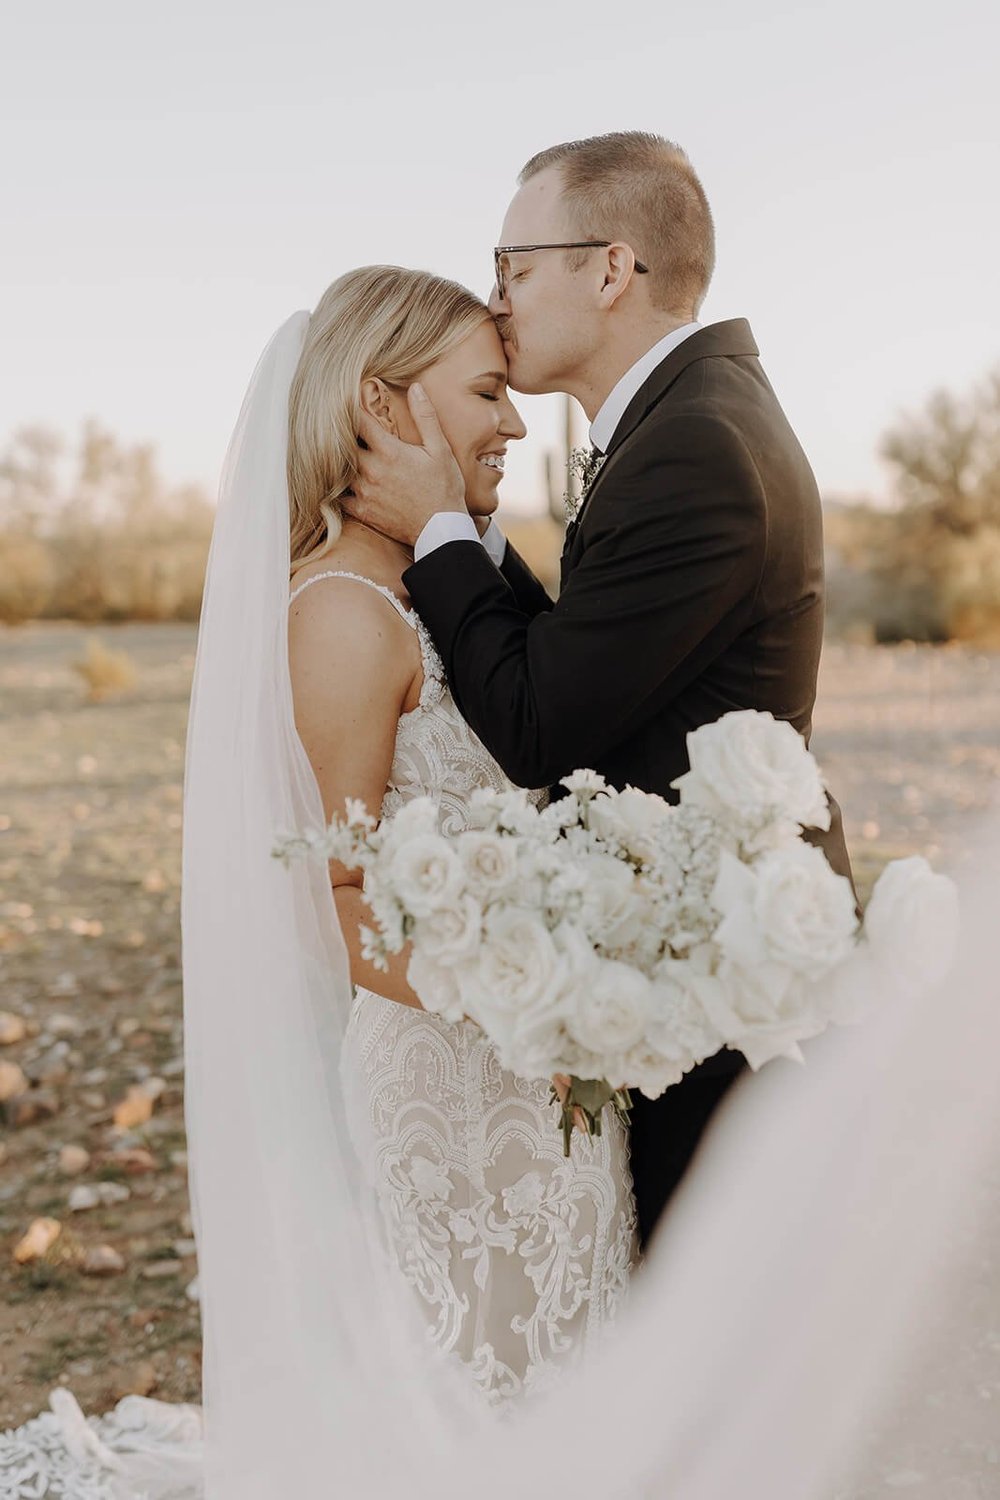 Groom kissing bride's forehead outside at Arizona destination wedding